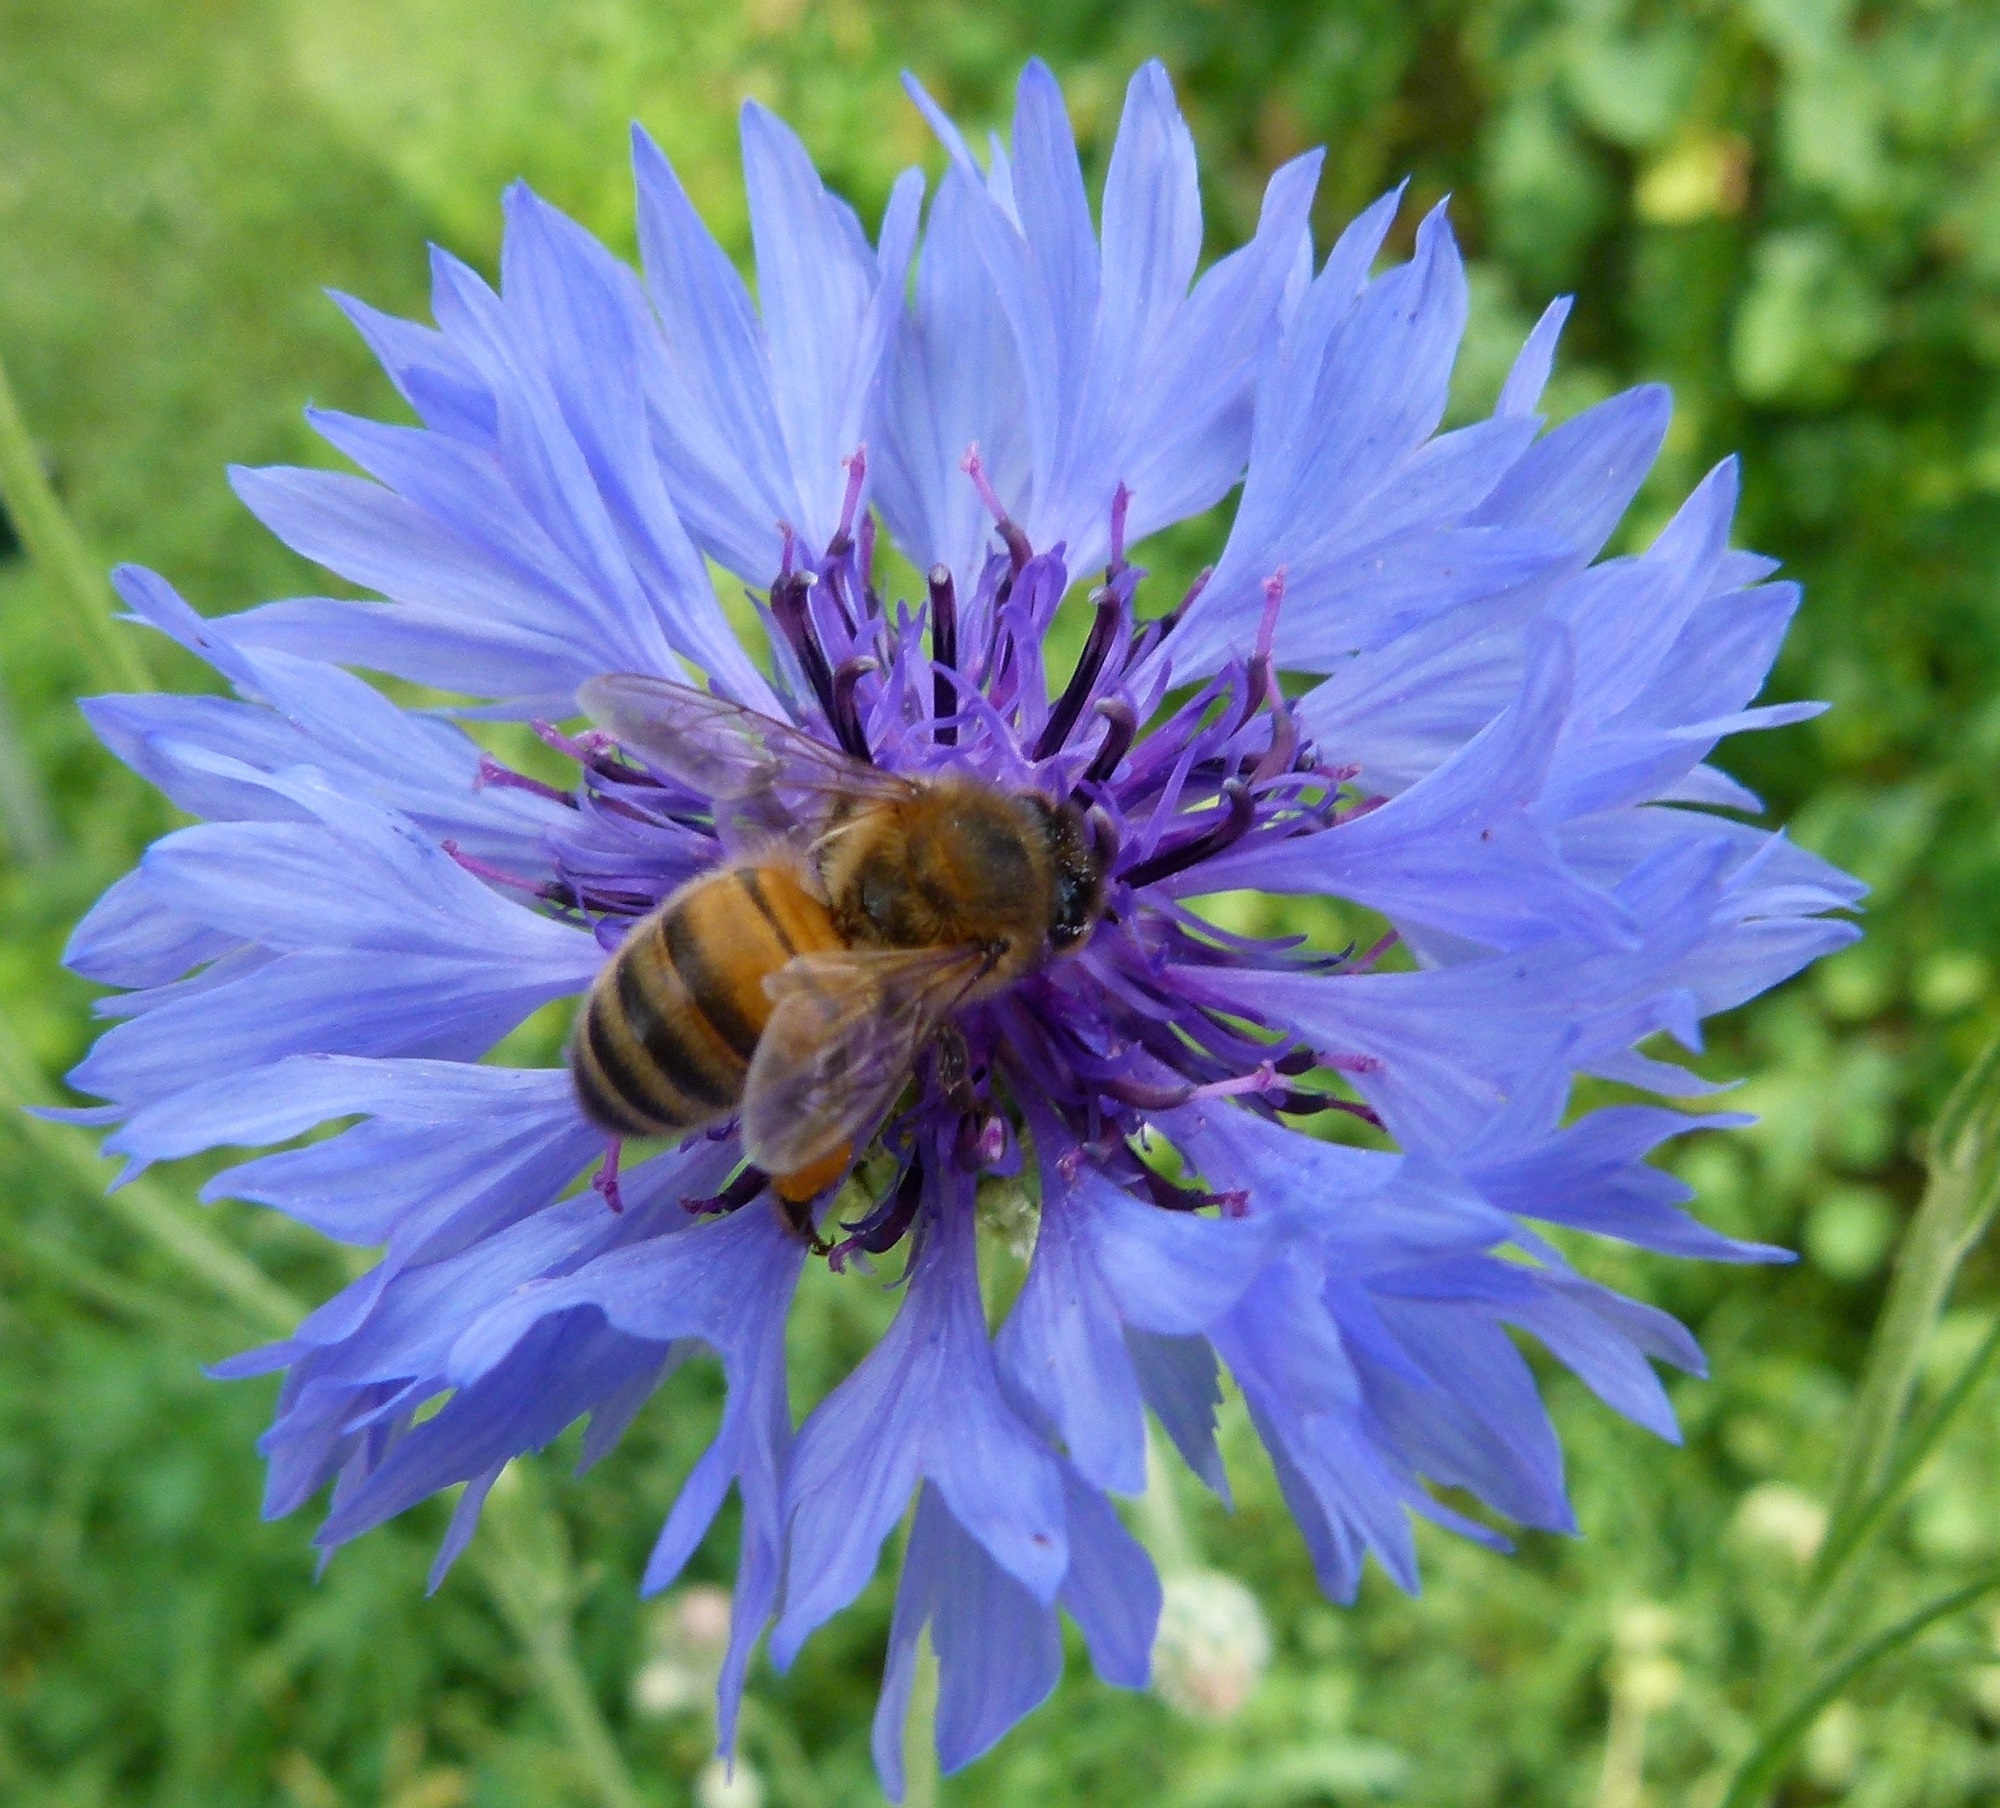 Western honeybee on the flower photo